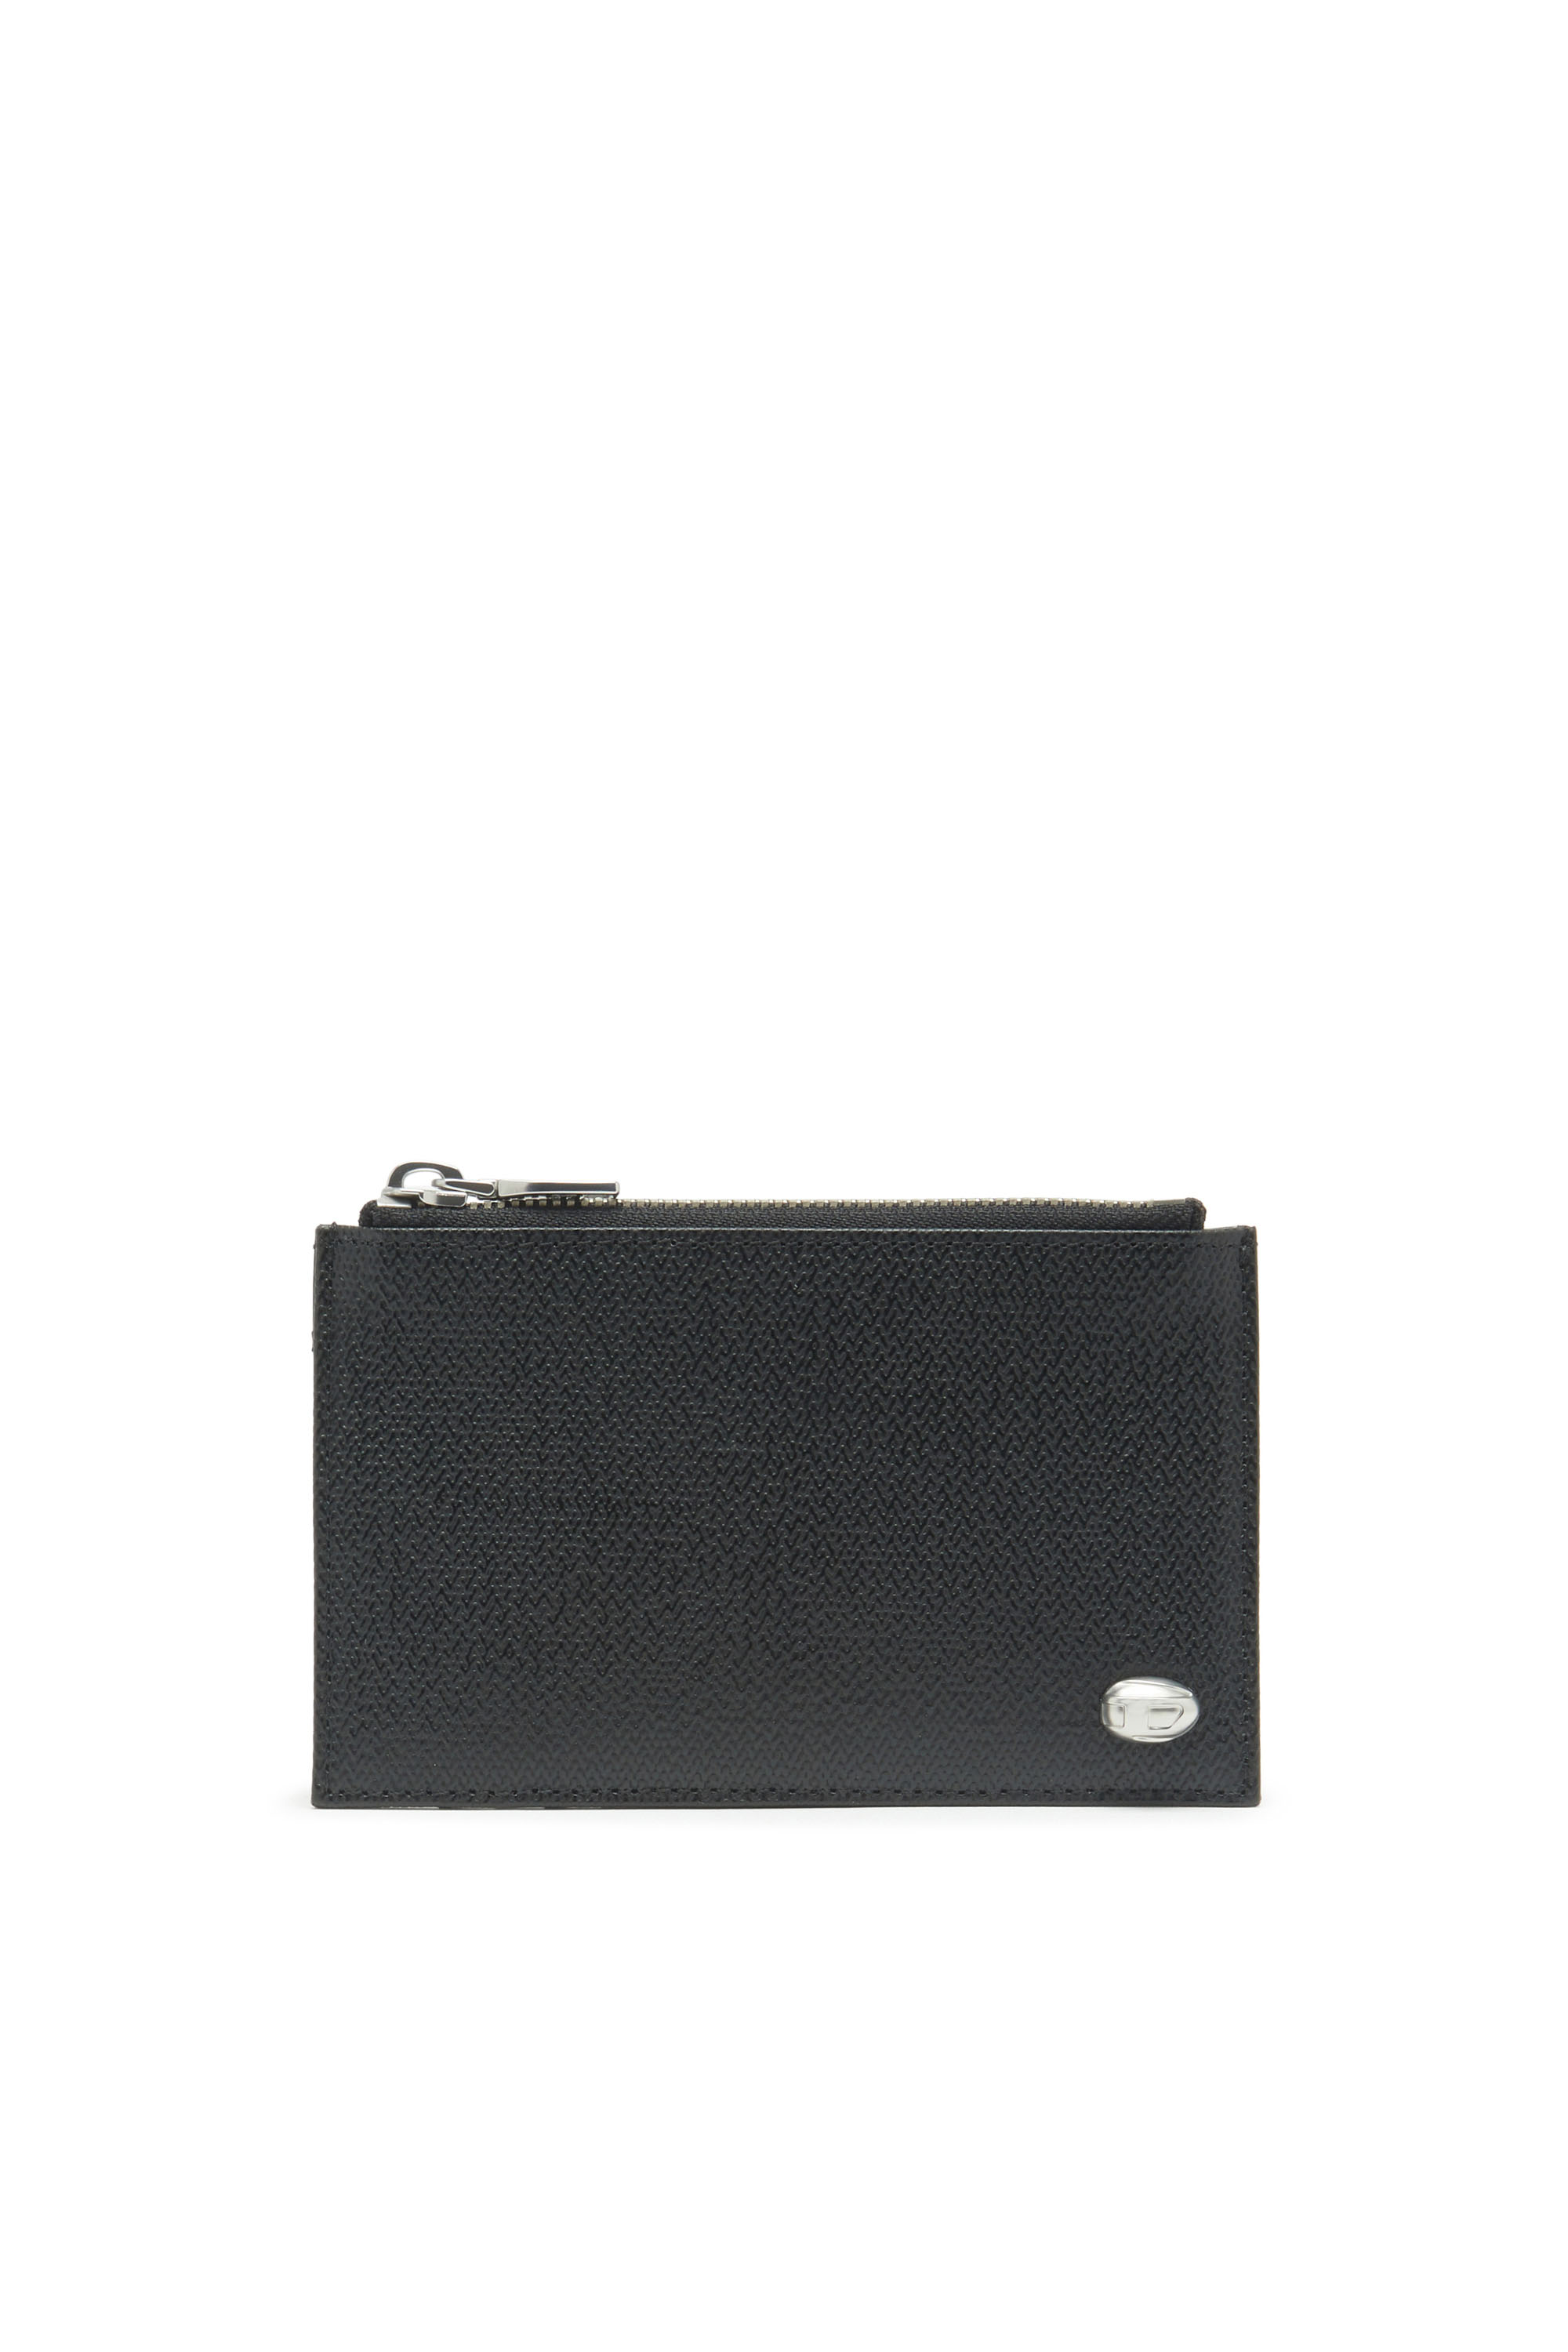 Diesel - Slim card holder in textured leather - Small Wallets - Unisex - Black